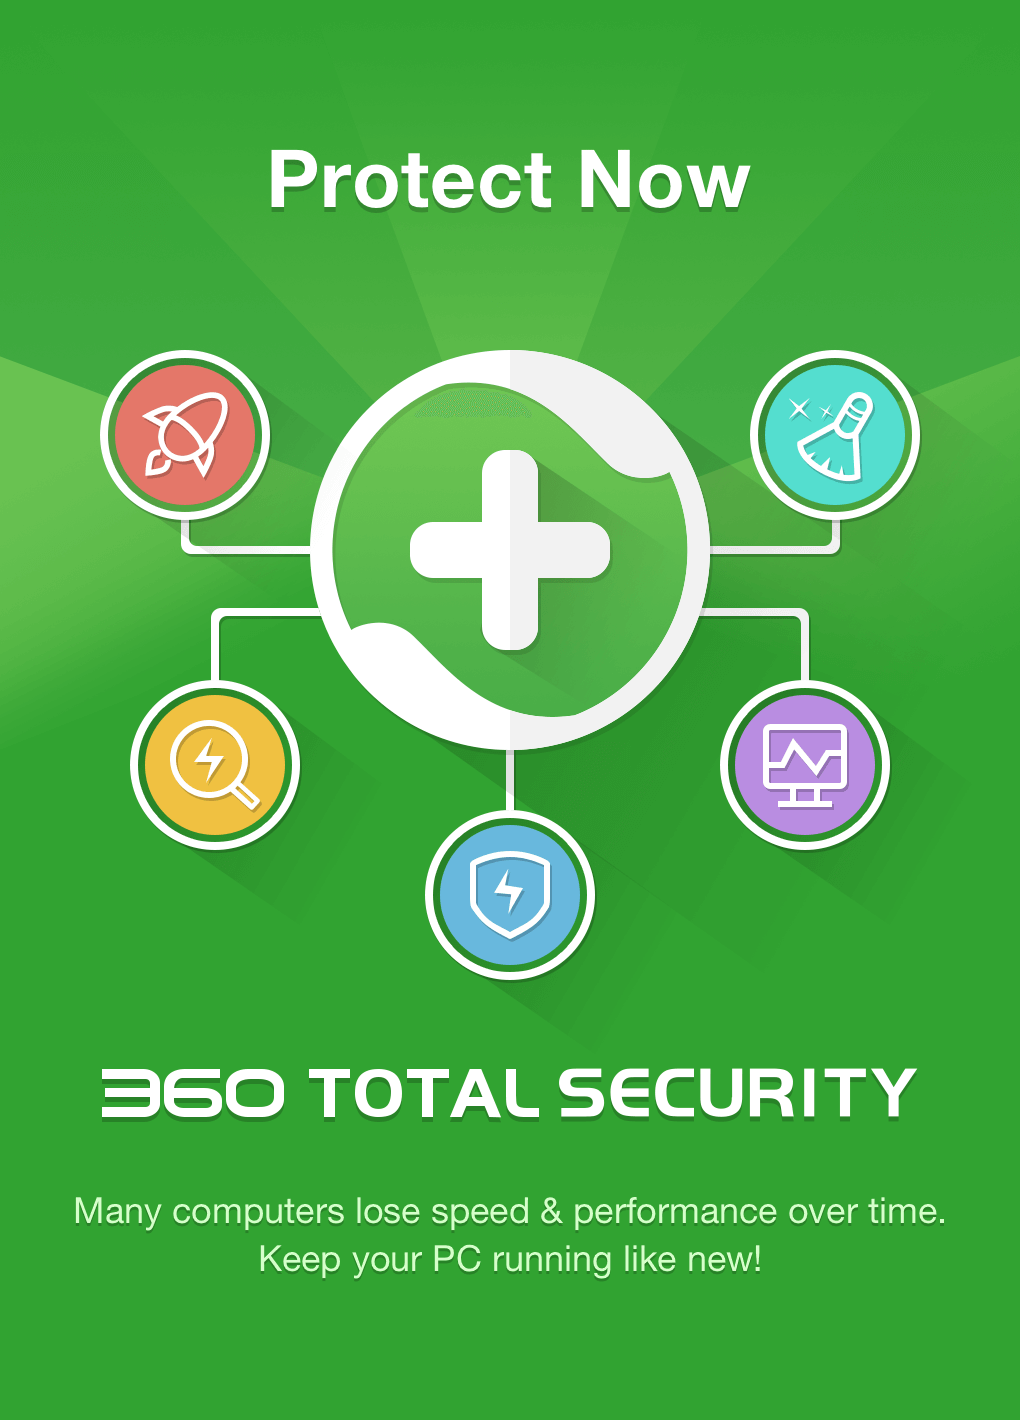 Qihoo Logo - About Qihoo 360 | 360 Total Security